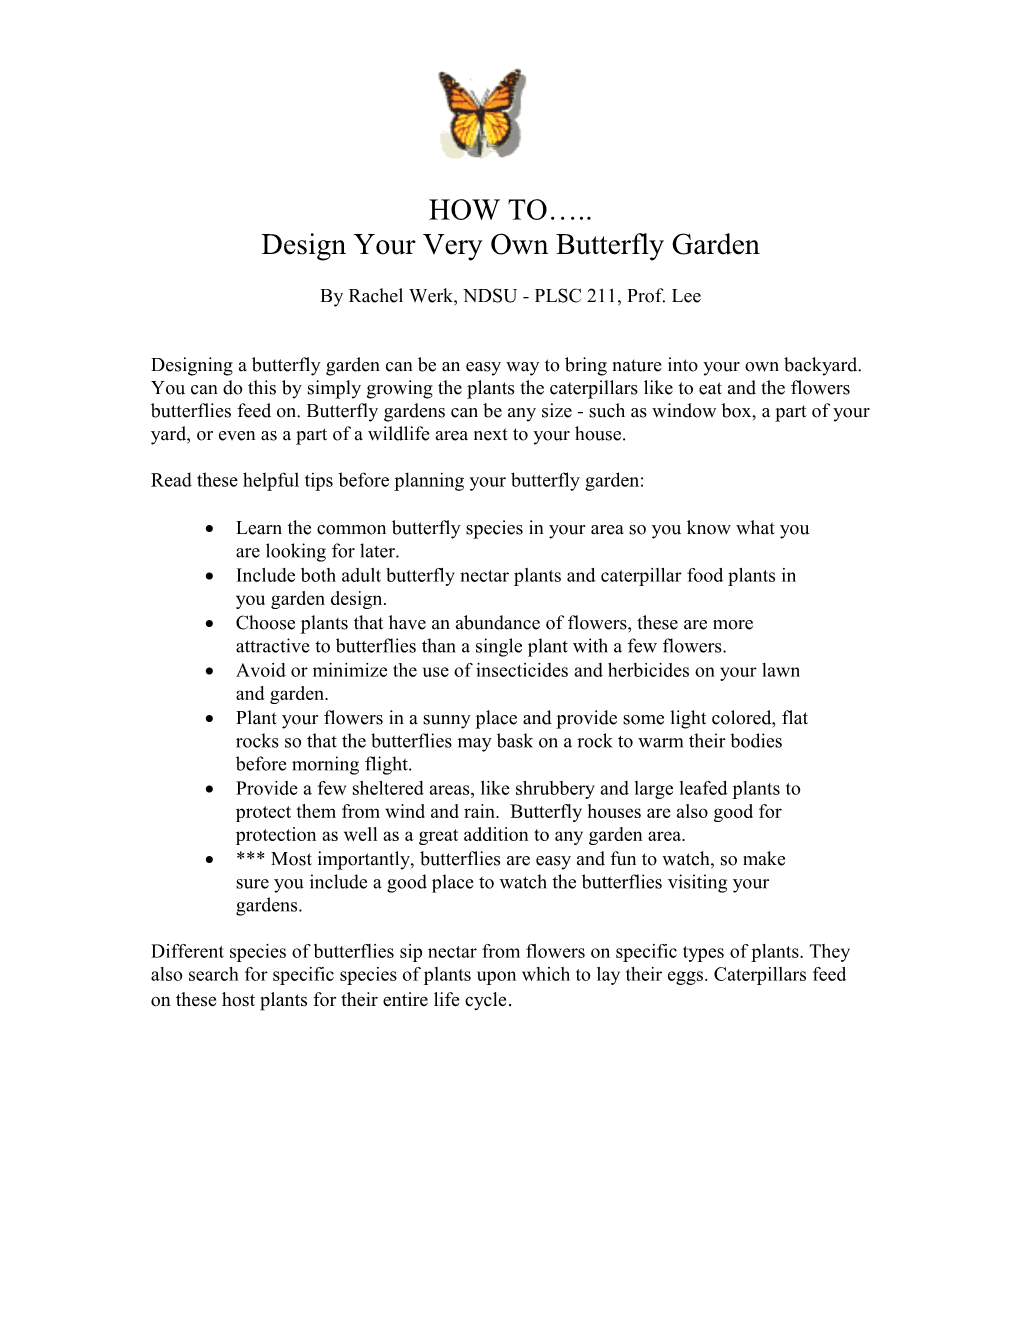 Design Your Very Own Butterflygarden